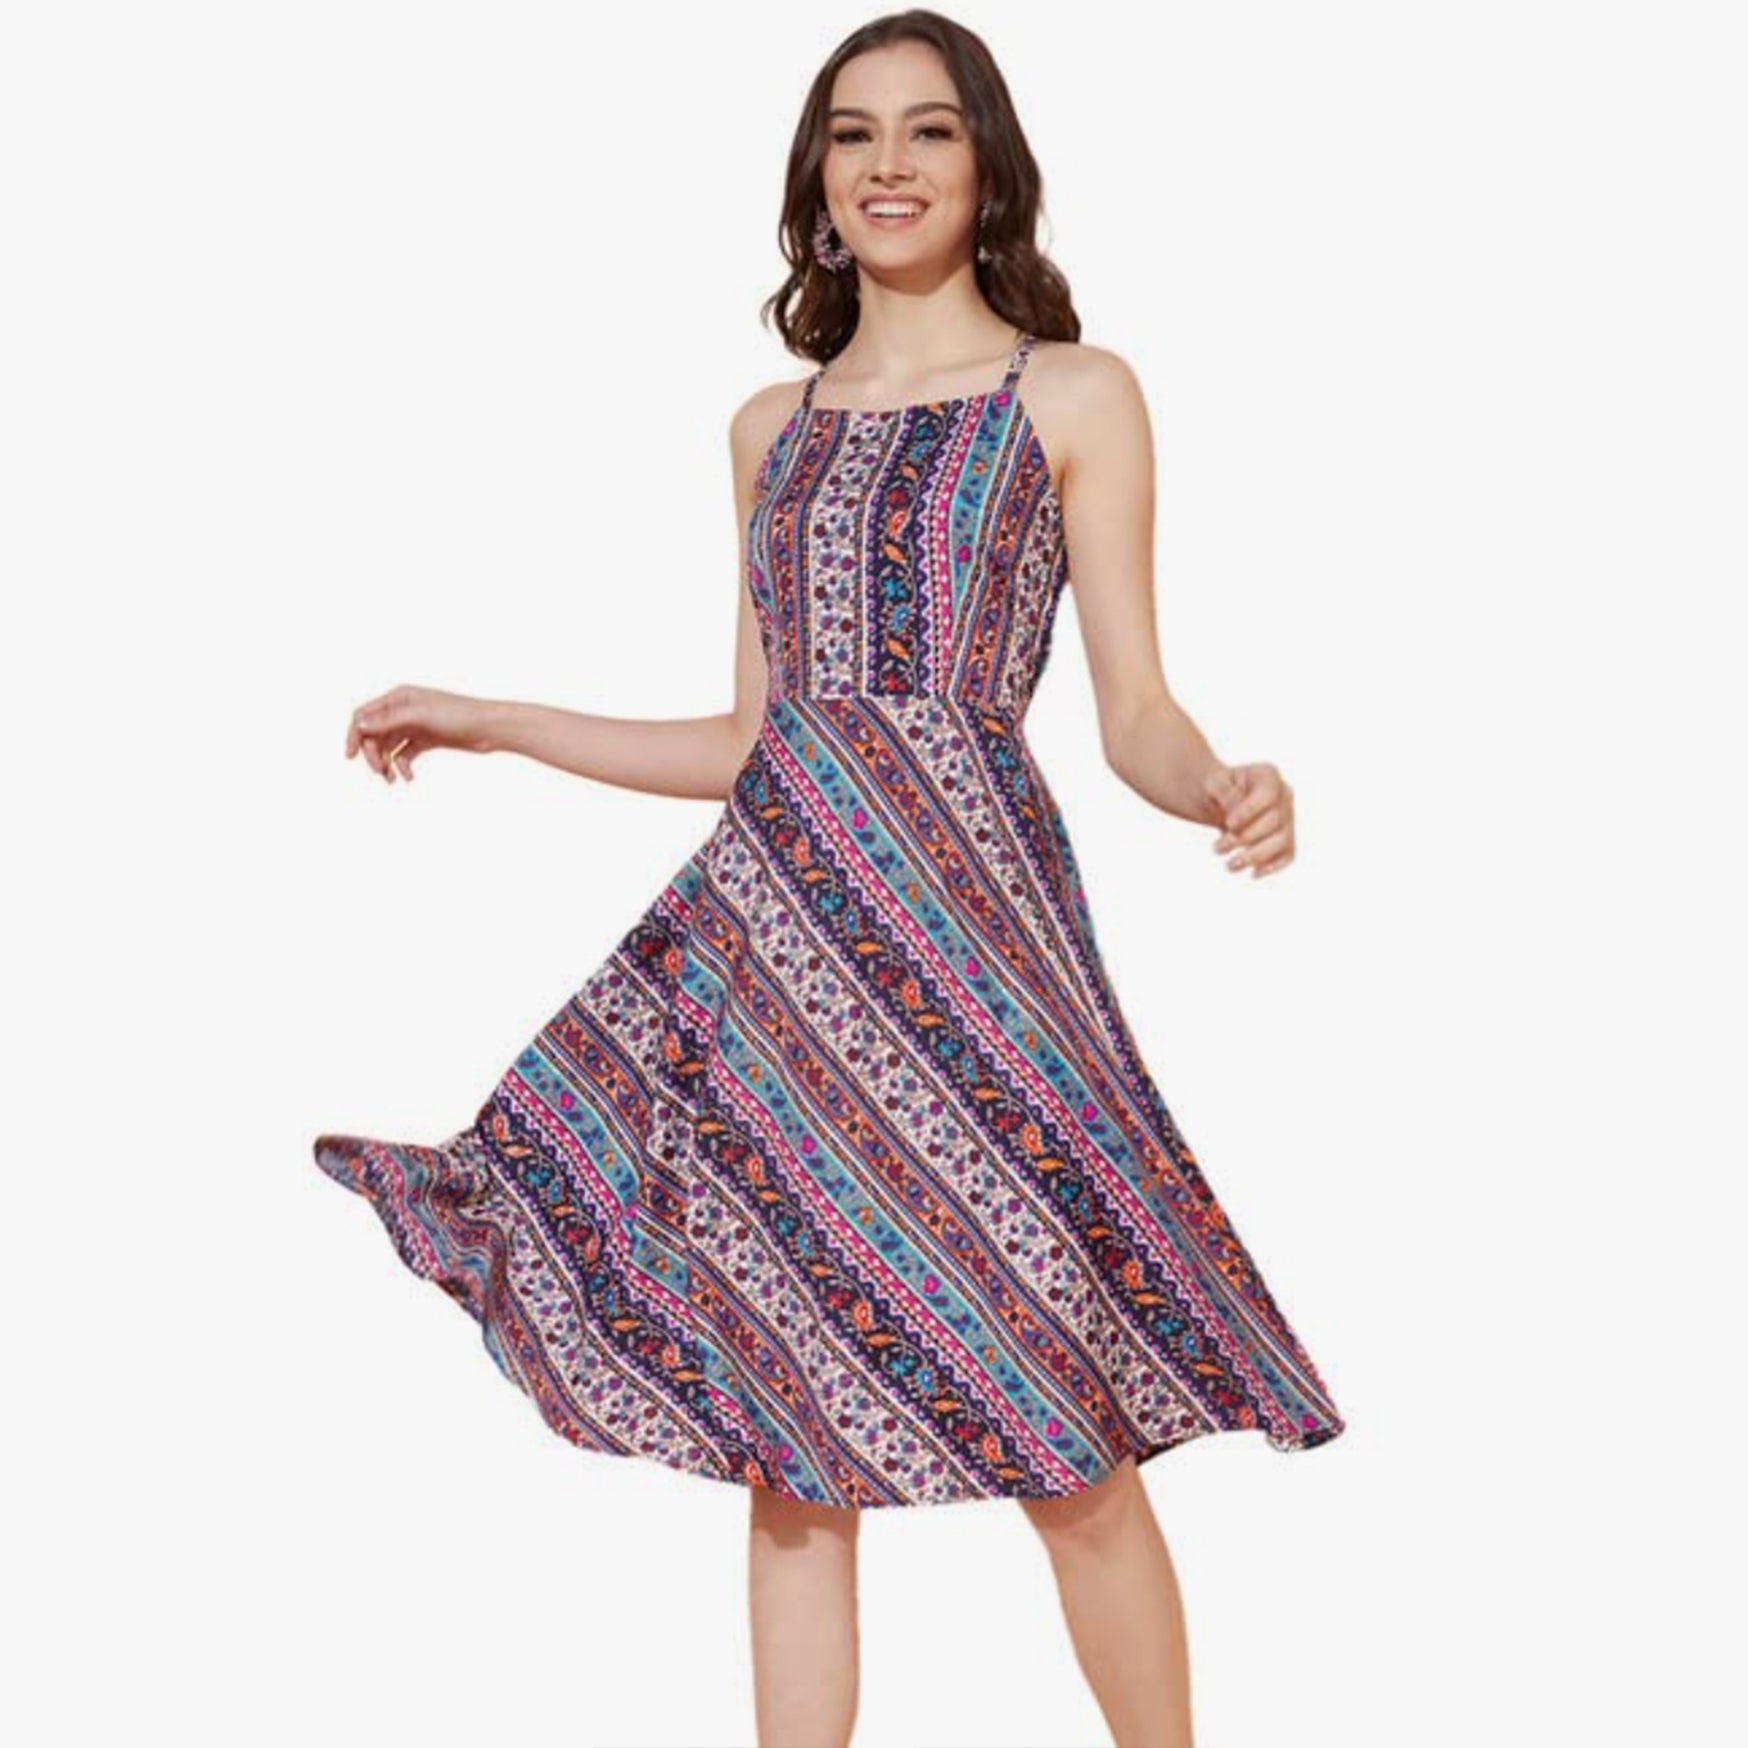 SIRIL Women's Mill Print Fit & Flare Crepe Dress(394TK7192-S_Multi) Multicolour